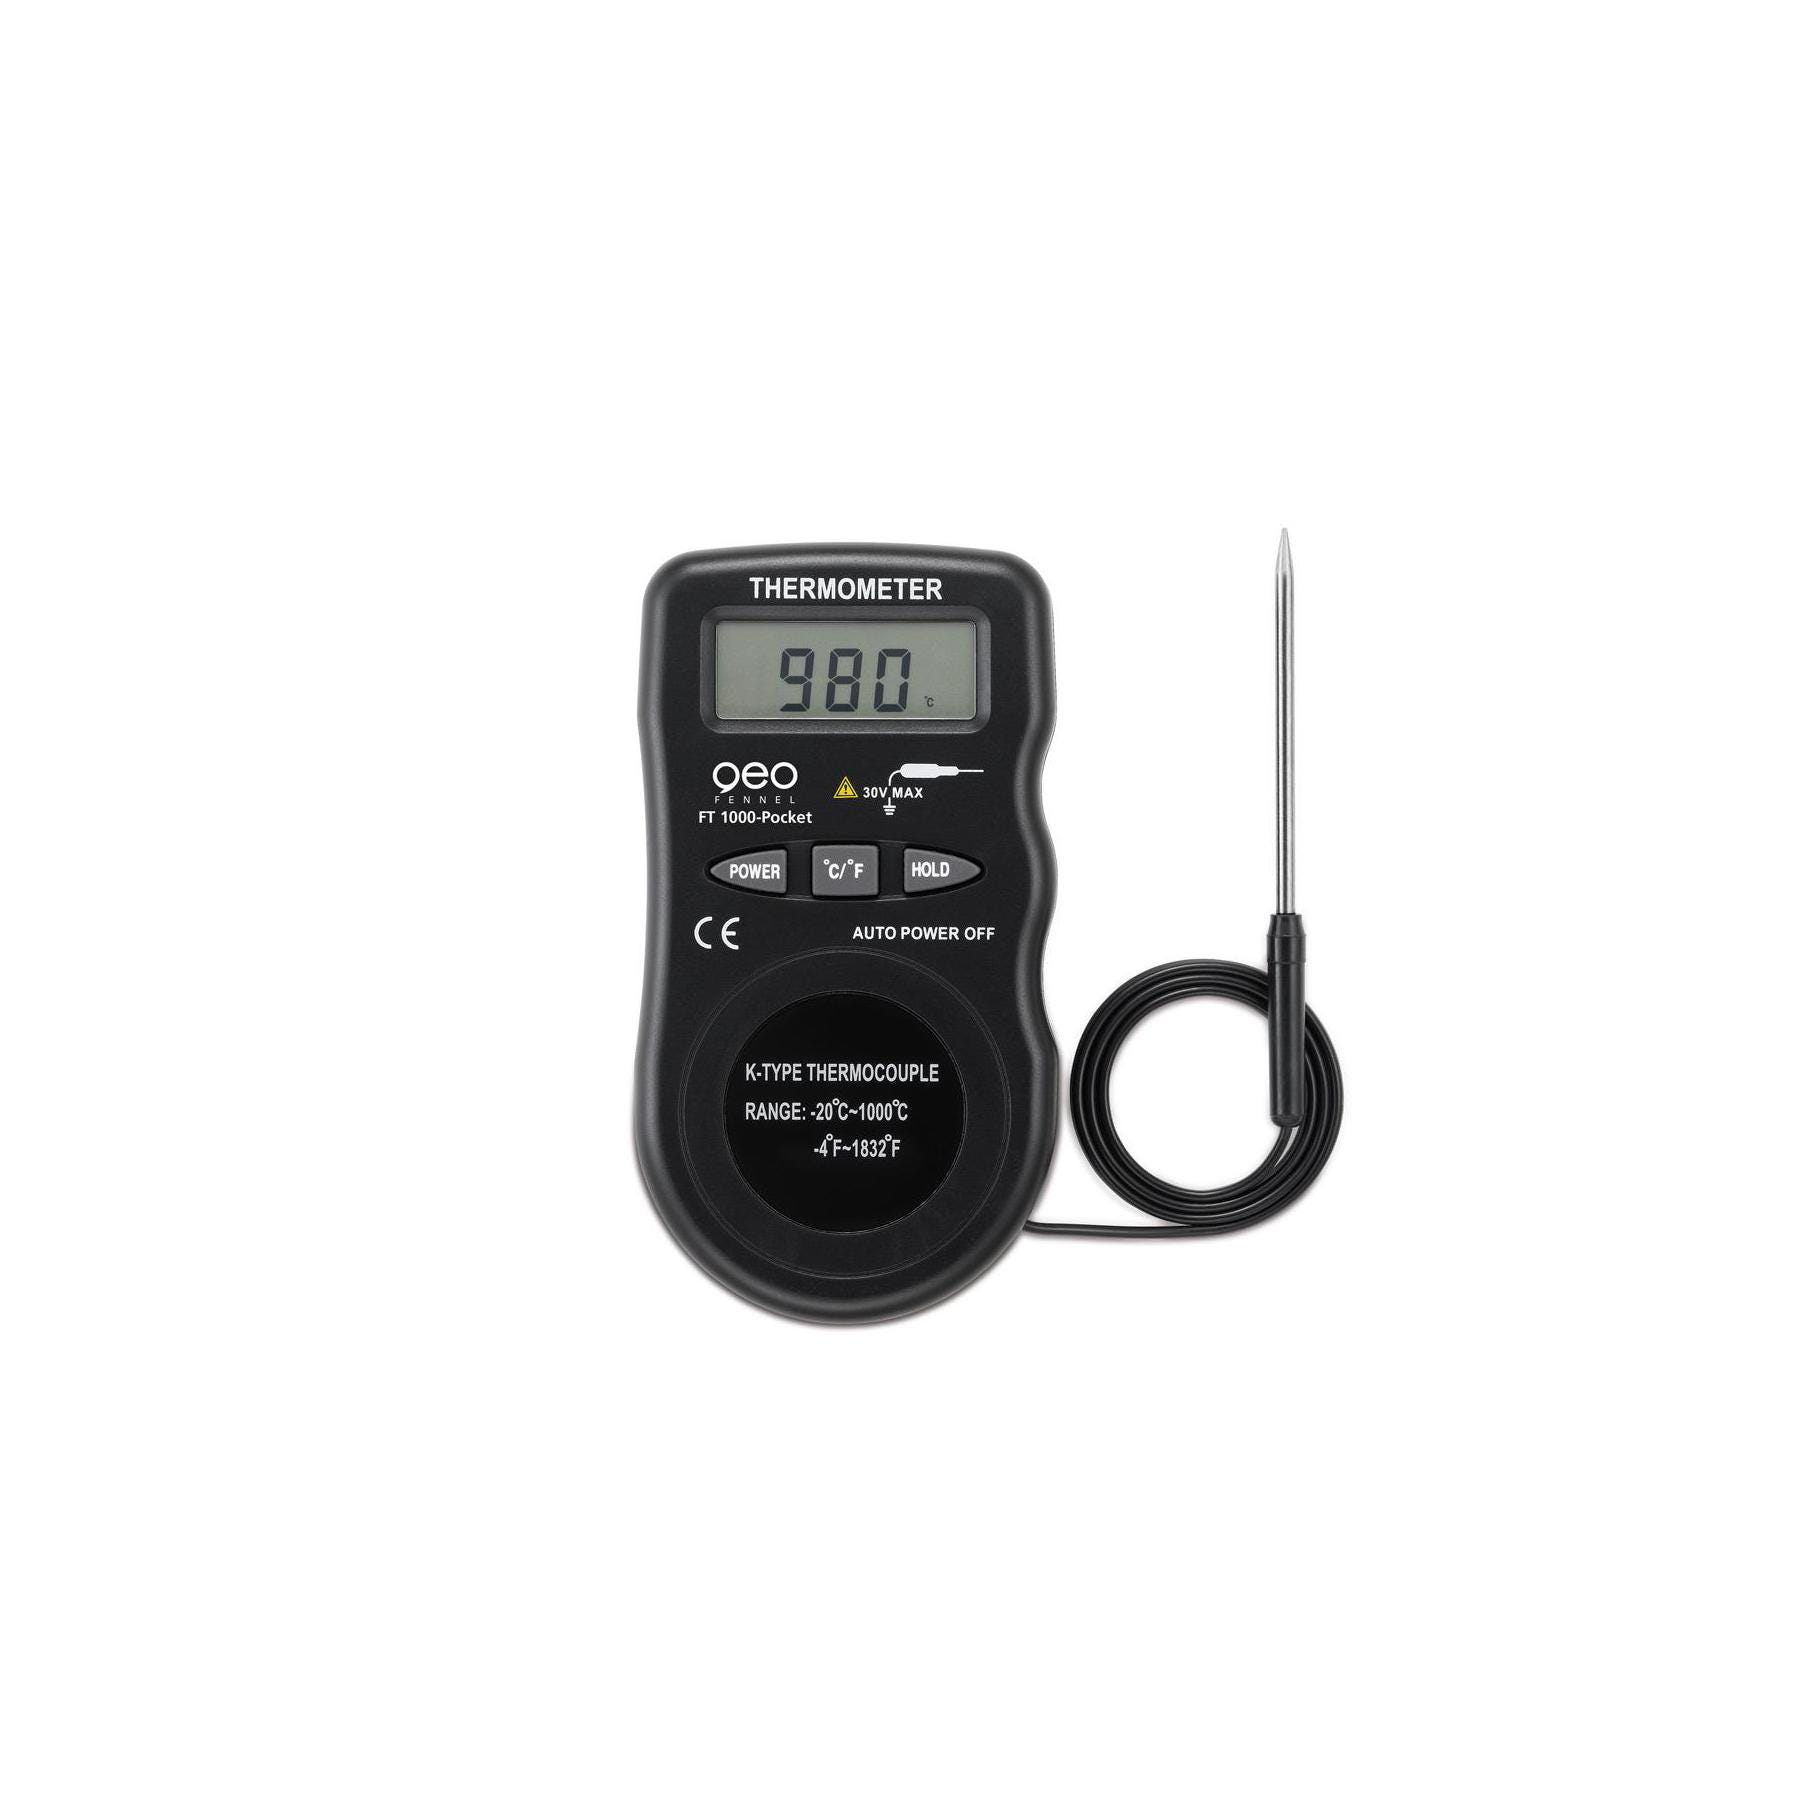 Thermomètre FT 1000-Pocket GEO FENNEL 800420 1